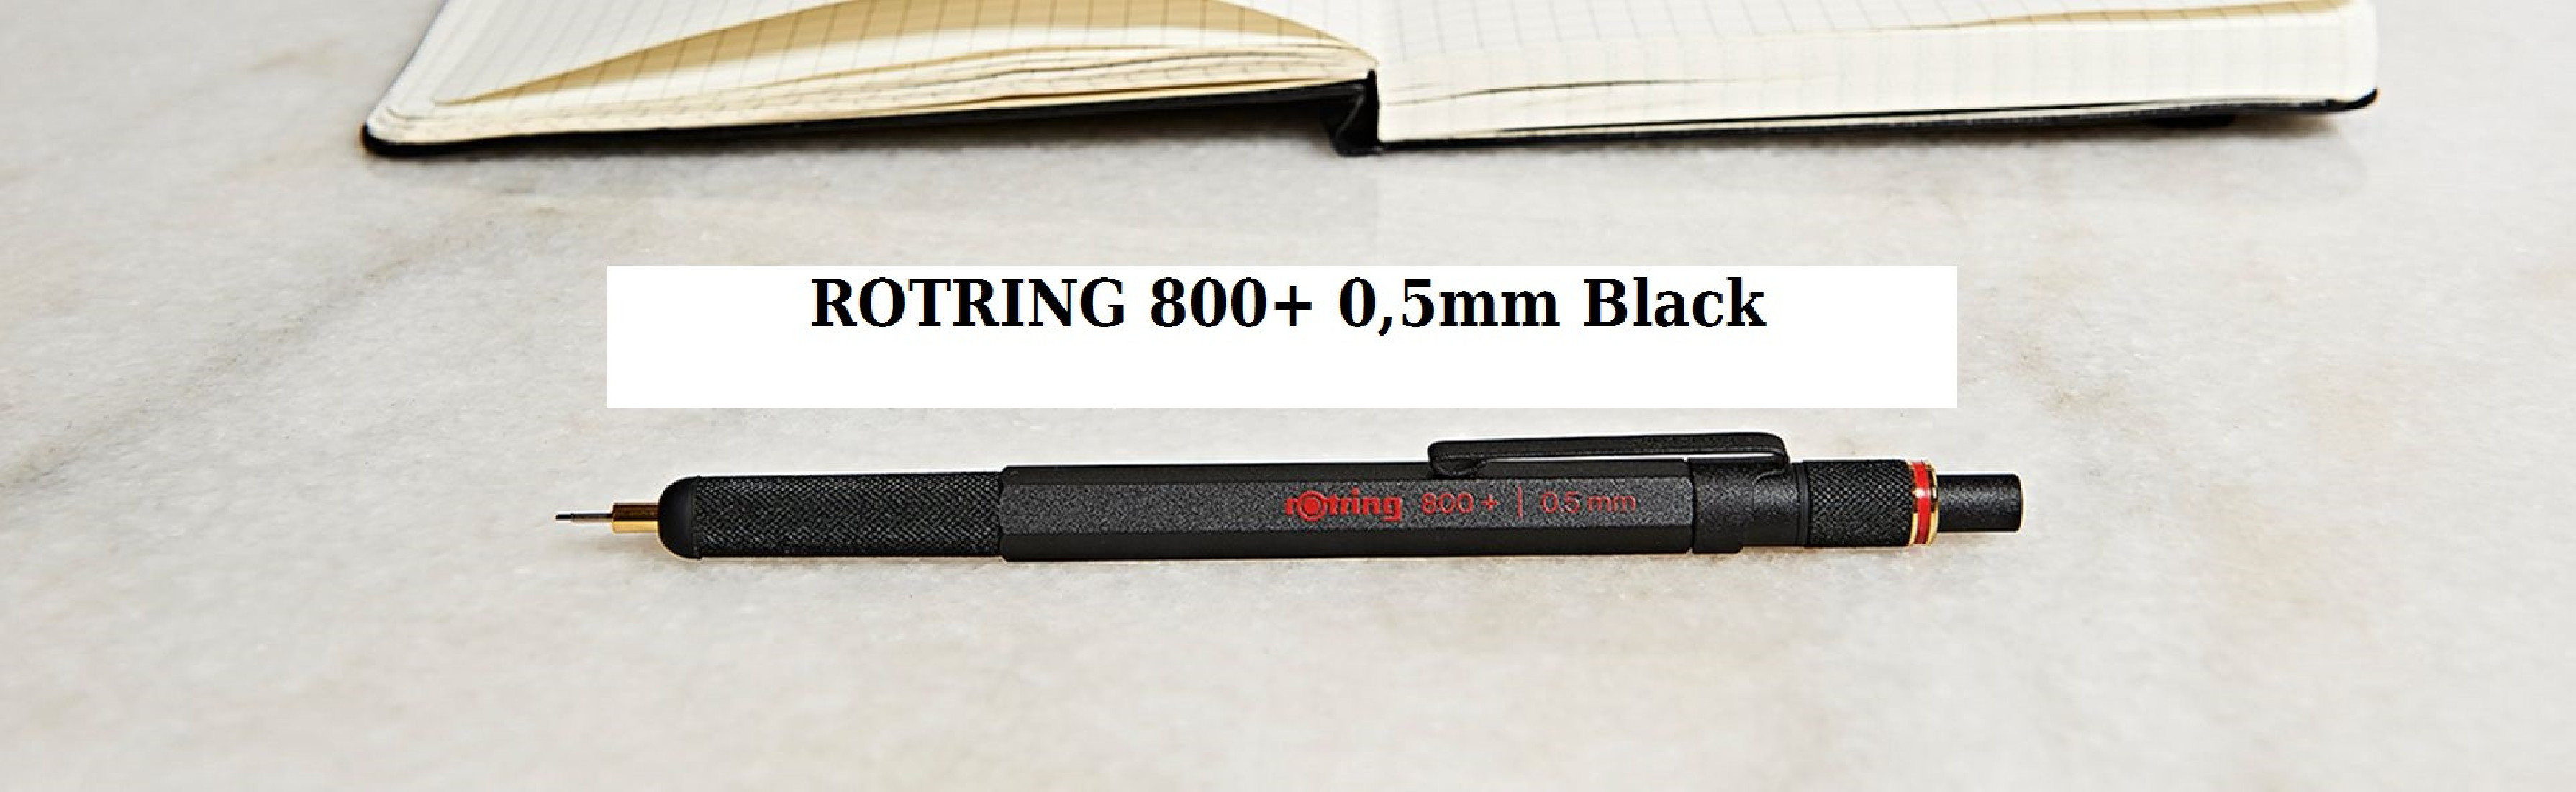 ROTRING 800+ BLACK 0,5mm (+Stylus Hybrid )MECHANICAL PENCIL